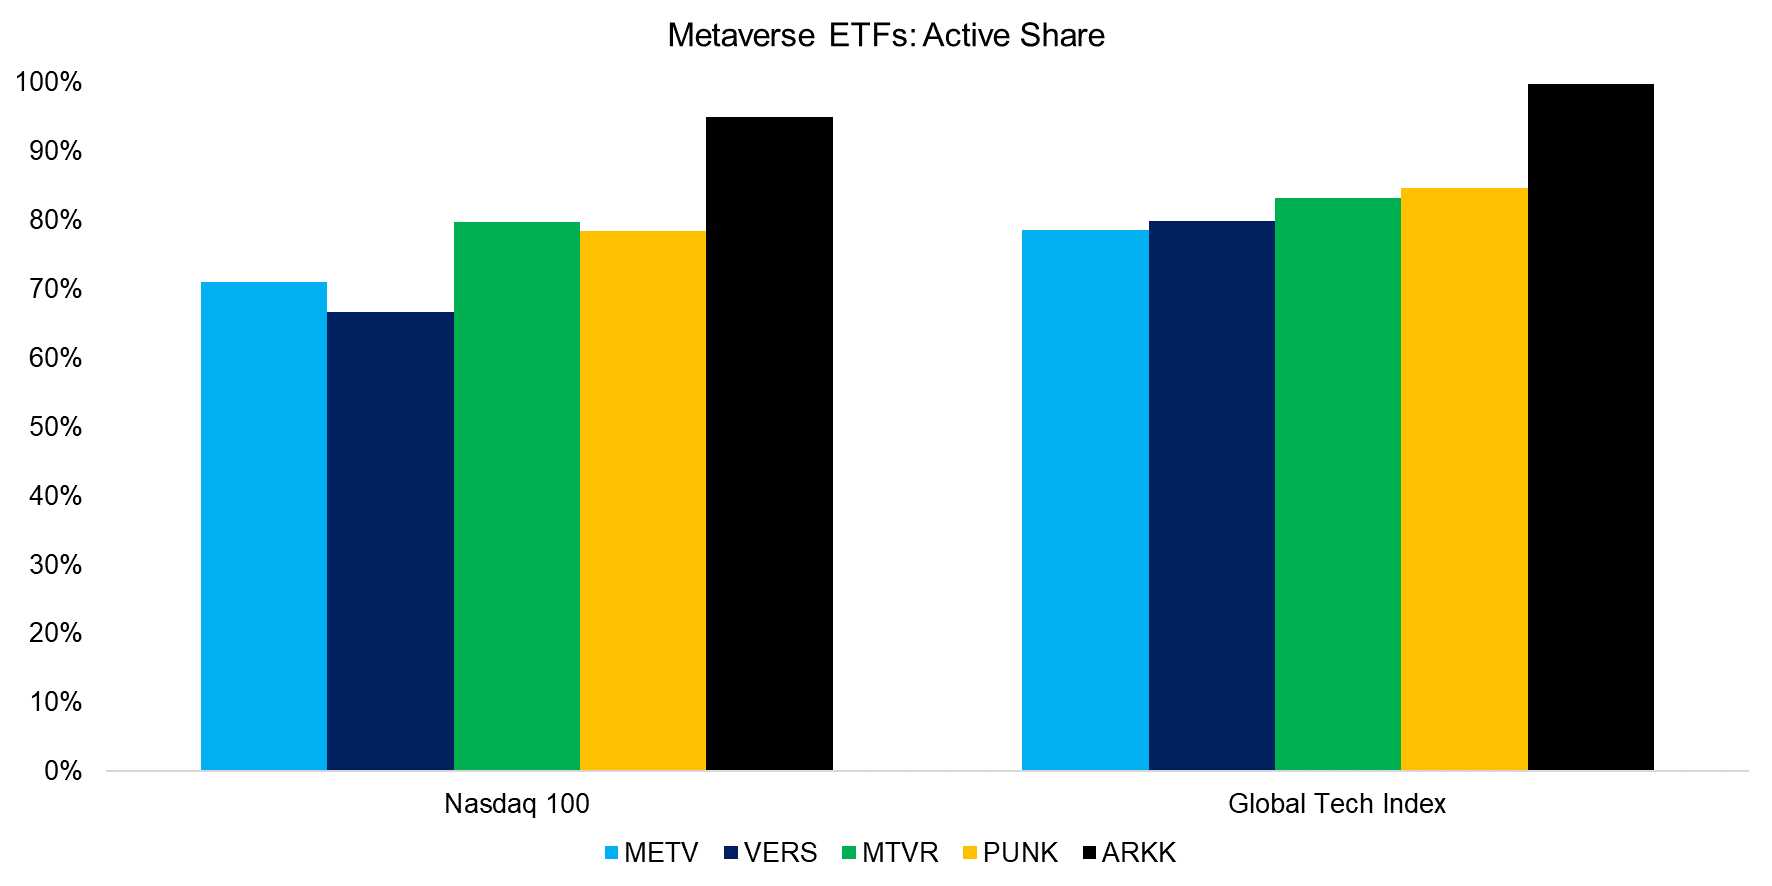 Metaverse ETFs Active Share